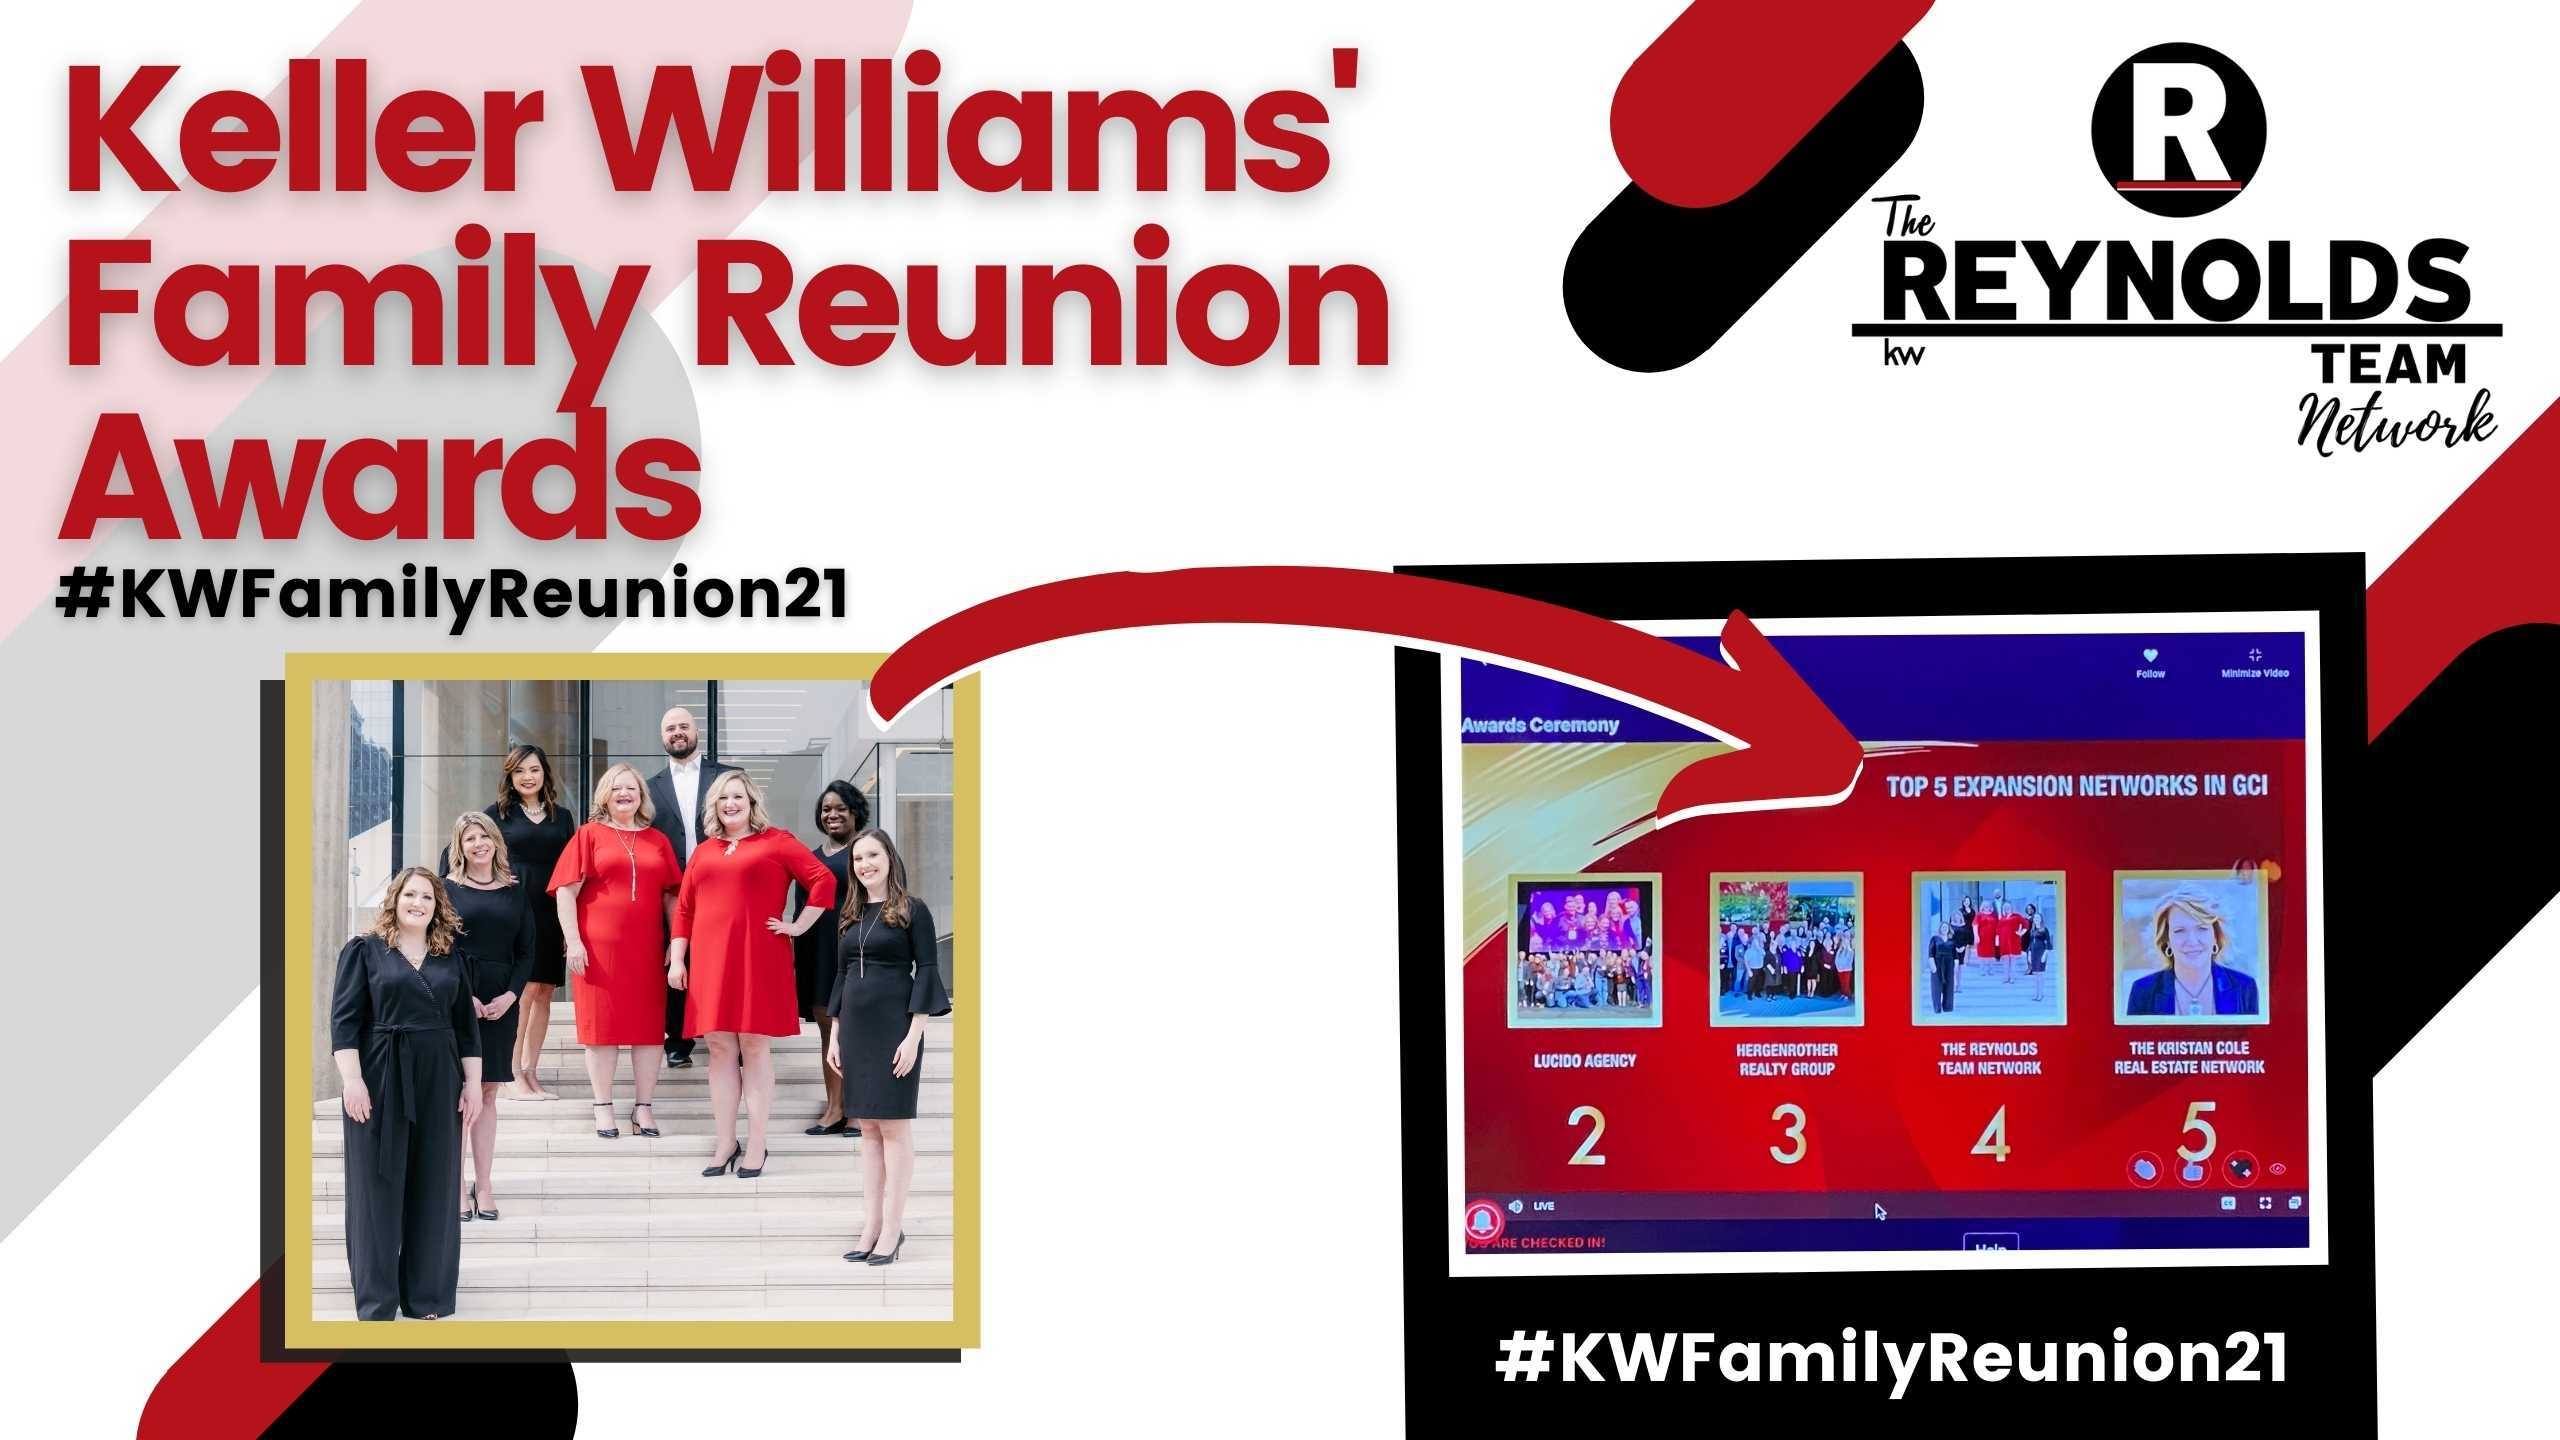 Keller Williams’ Family Reunion Awards